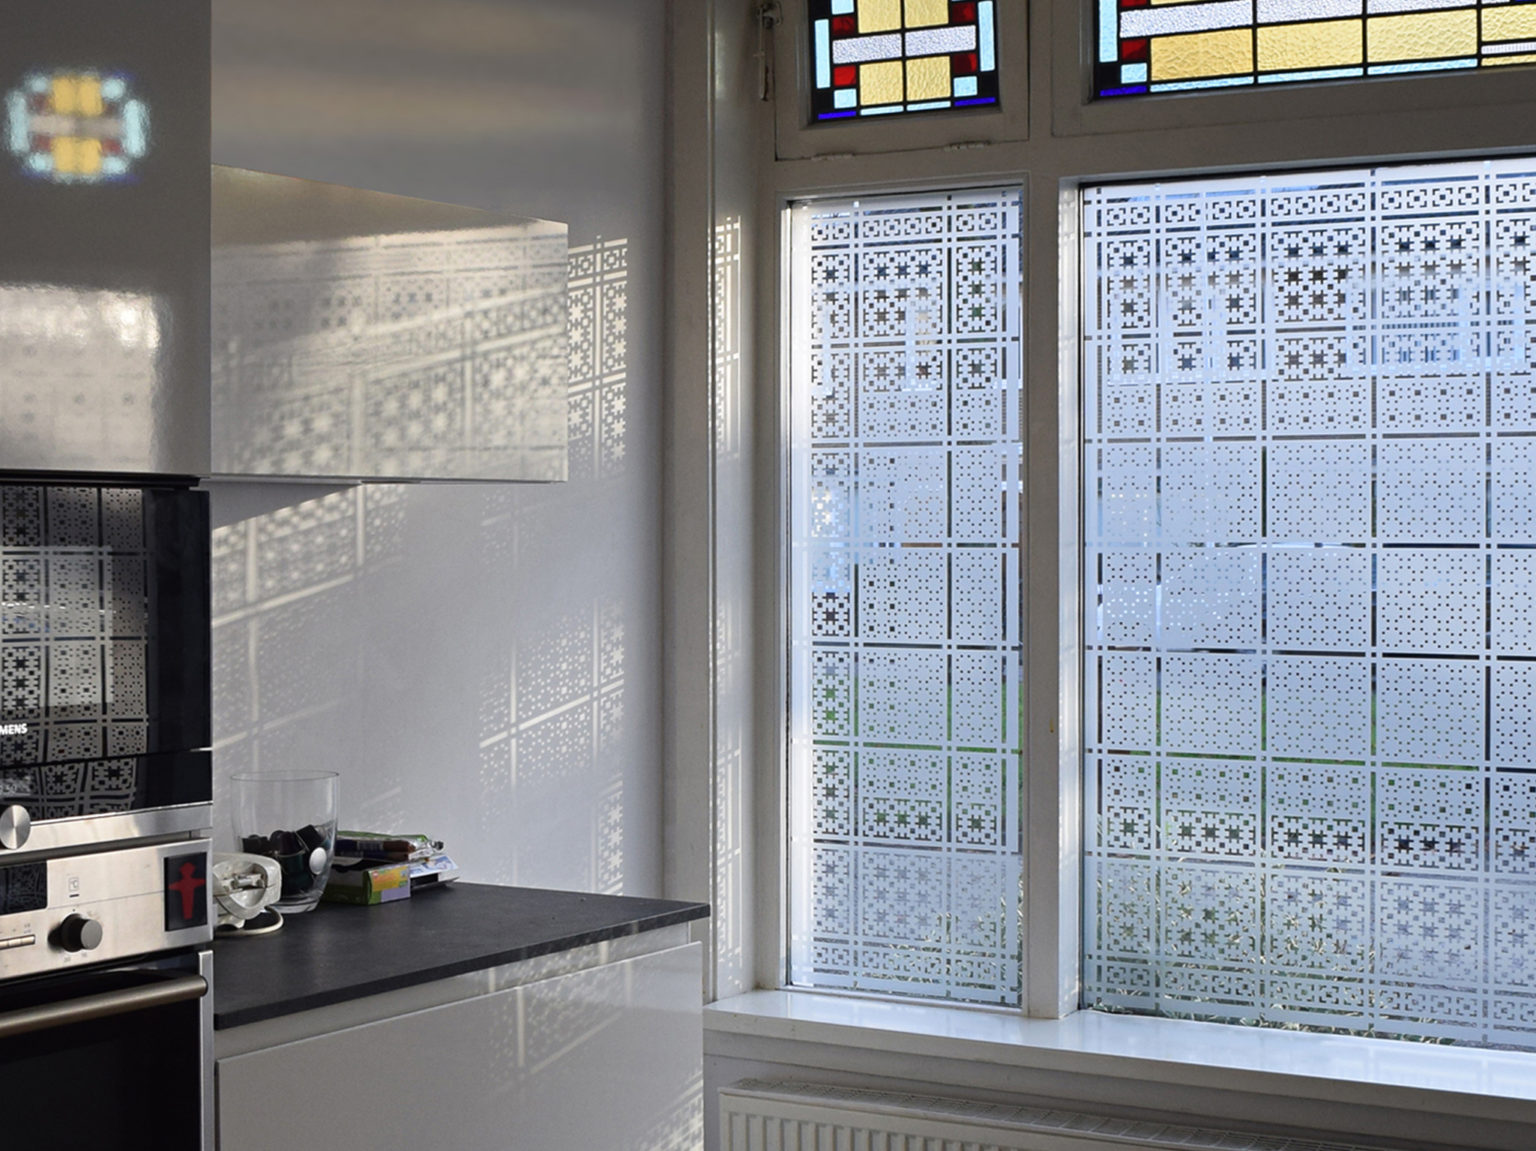 raamfolie patroon/Schutspatroon op keukenraam van binnenuit gezien